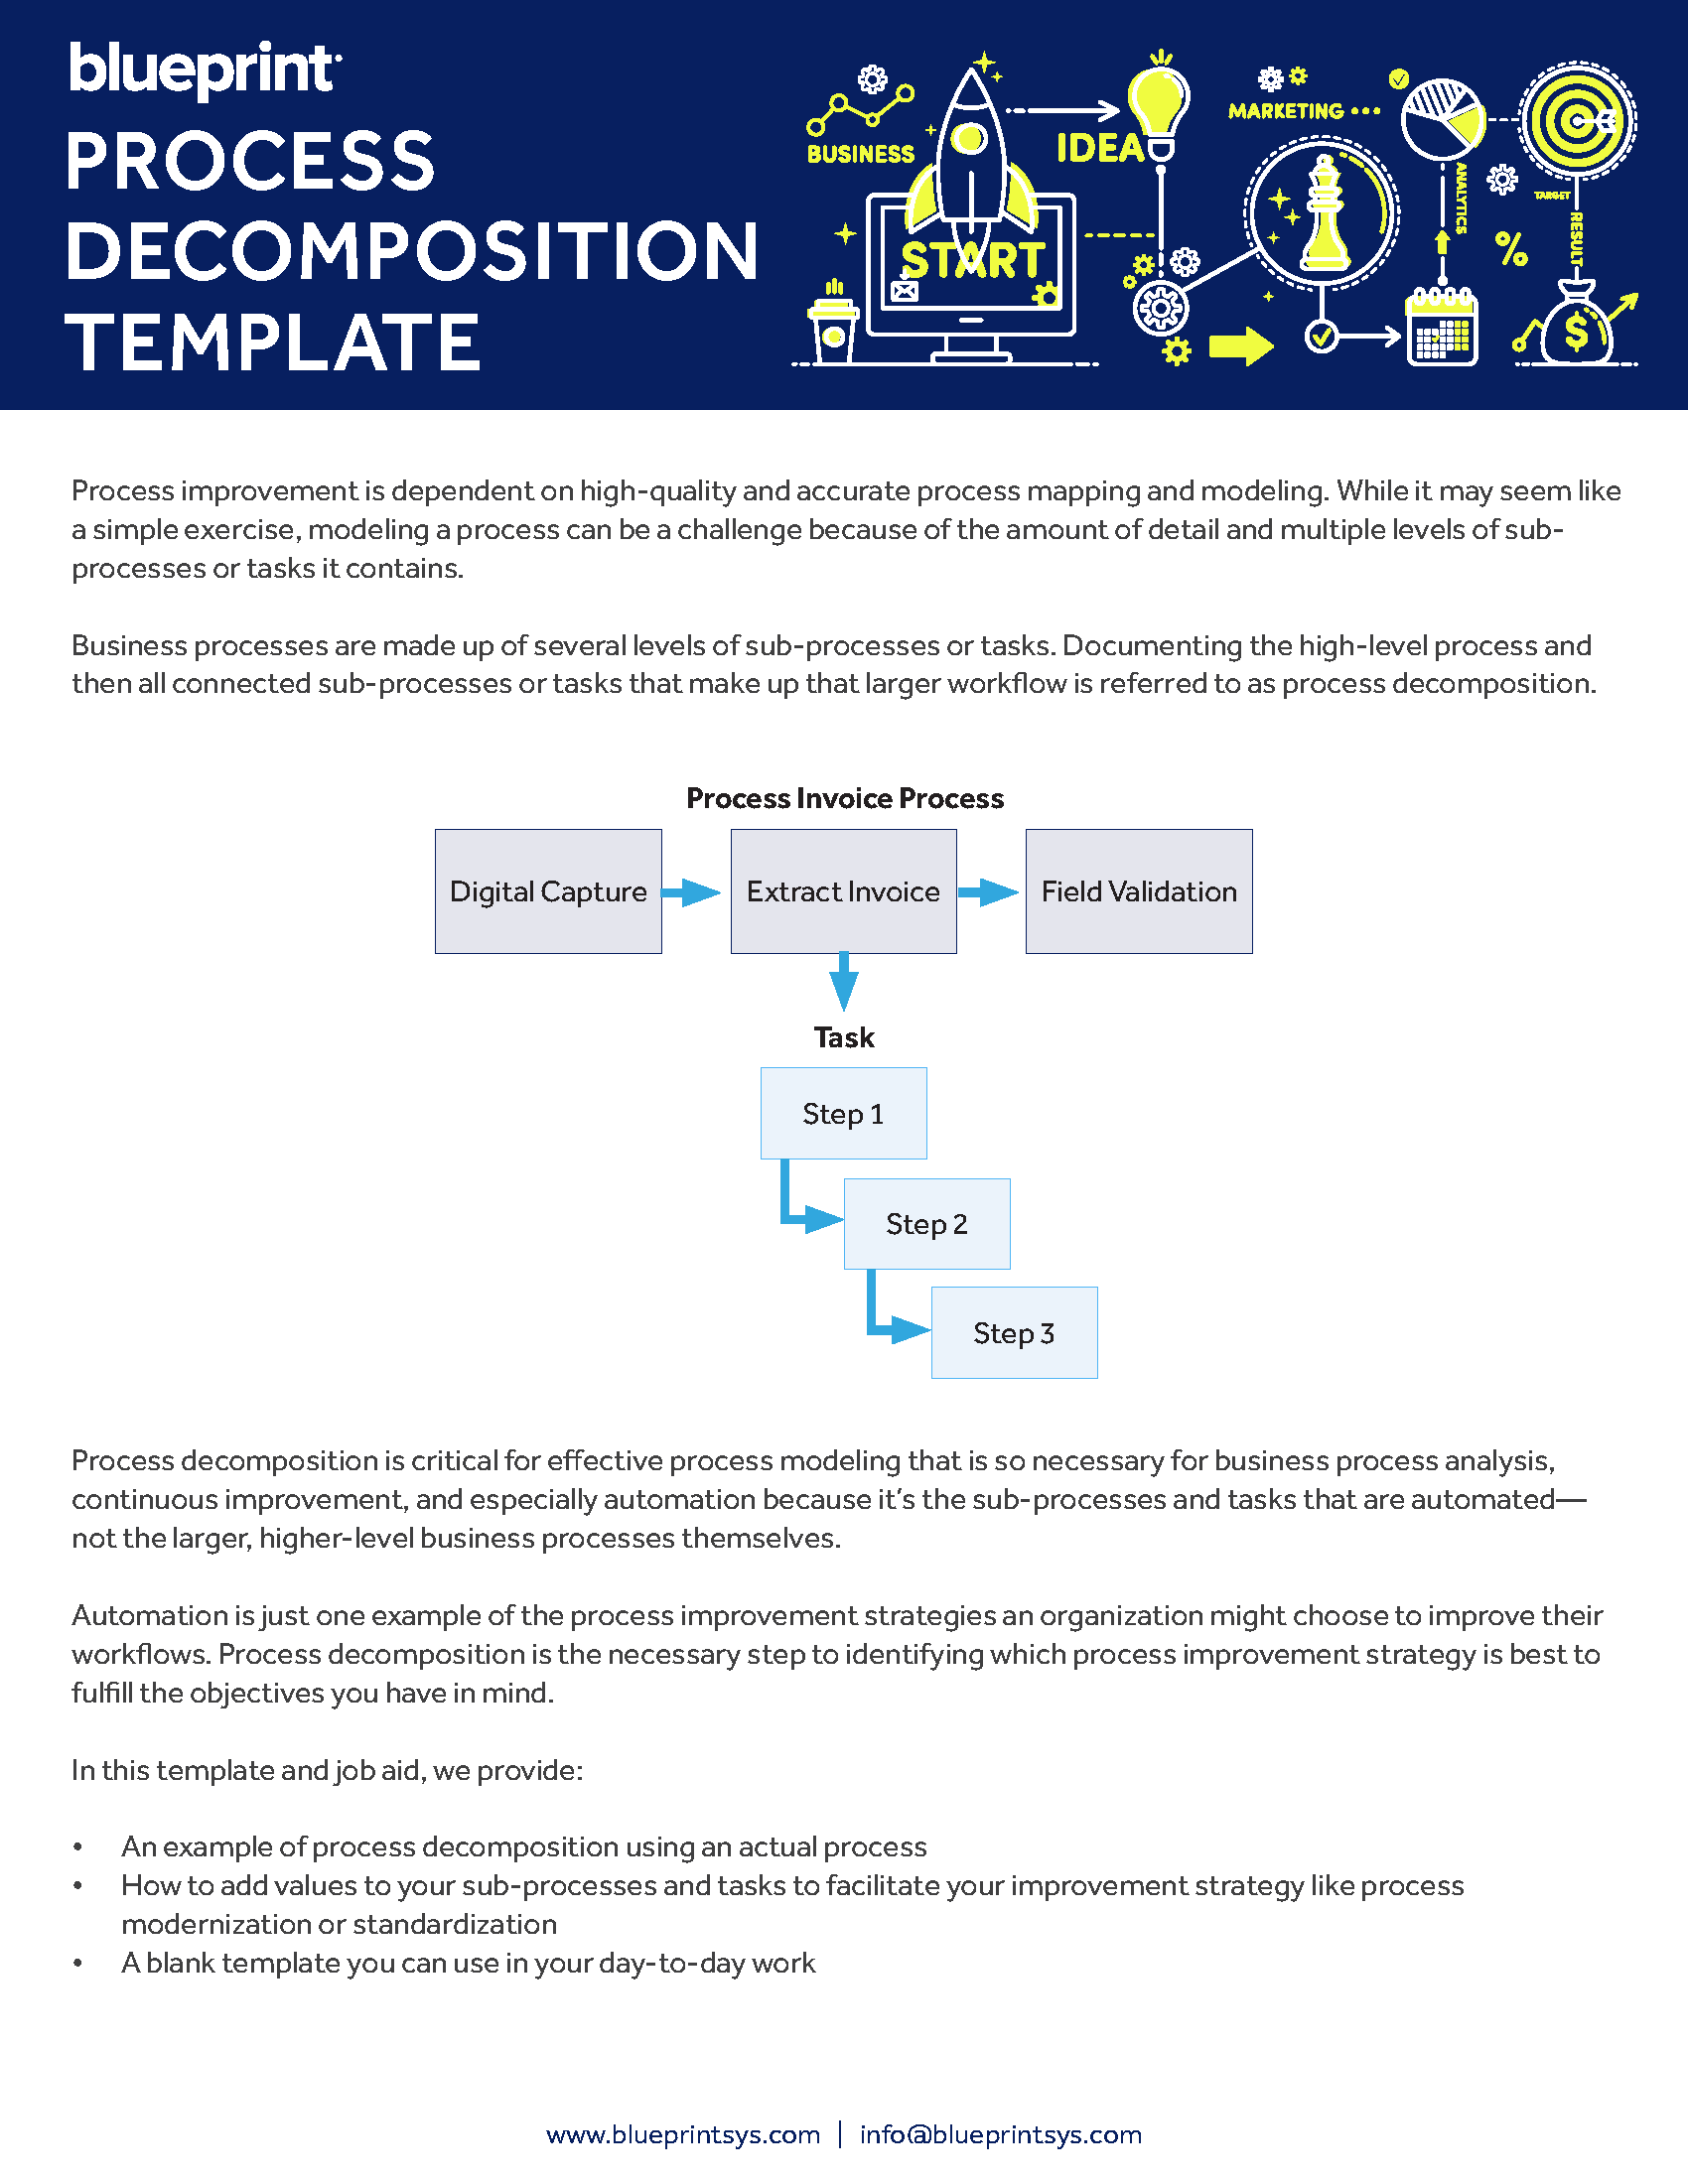 Blueprint-Process-Decomposition-Job-Aid-and-Template